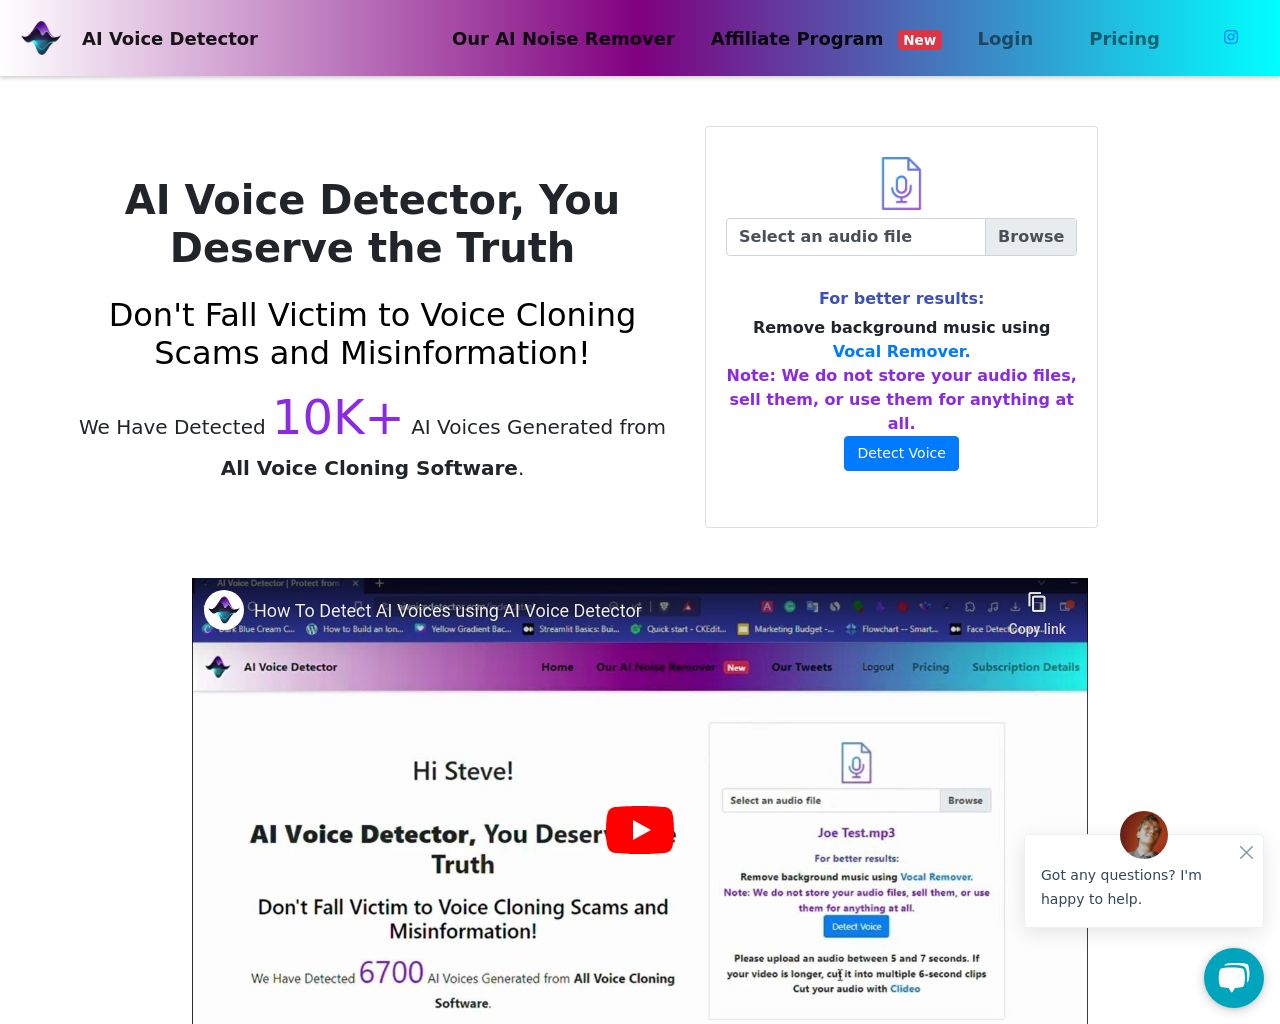 AI Voice Detector - AI Generated Voice Detector